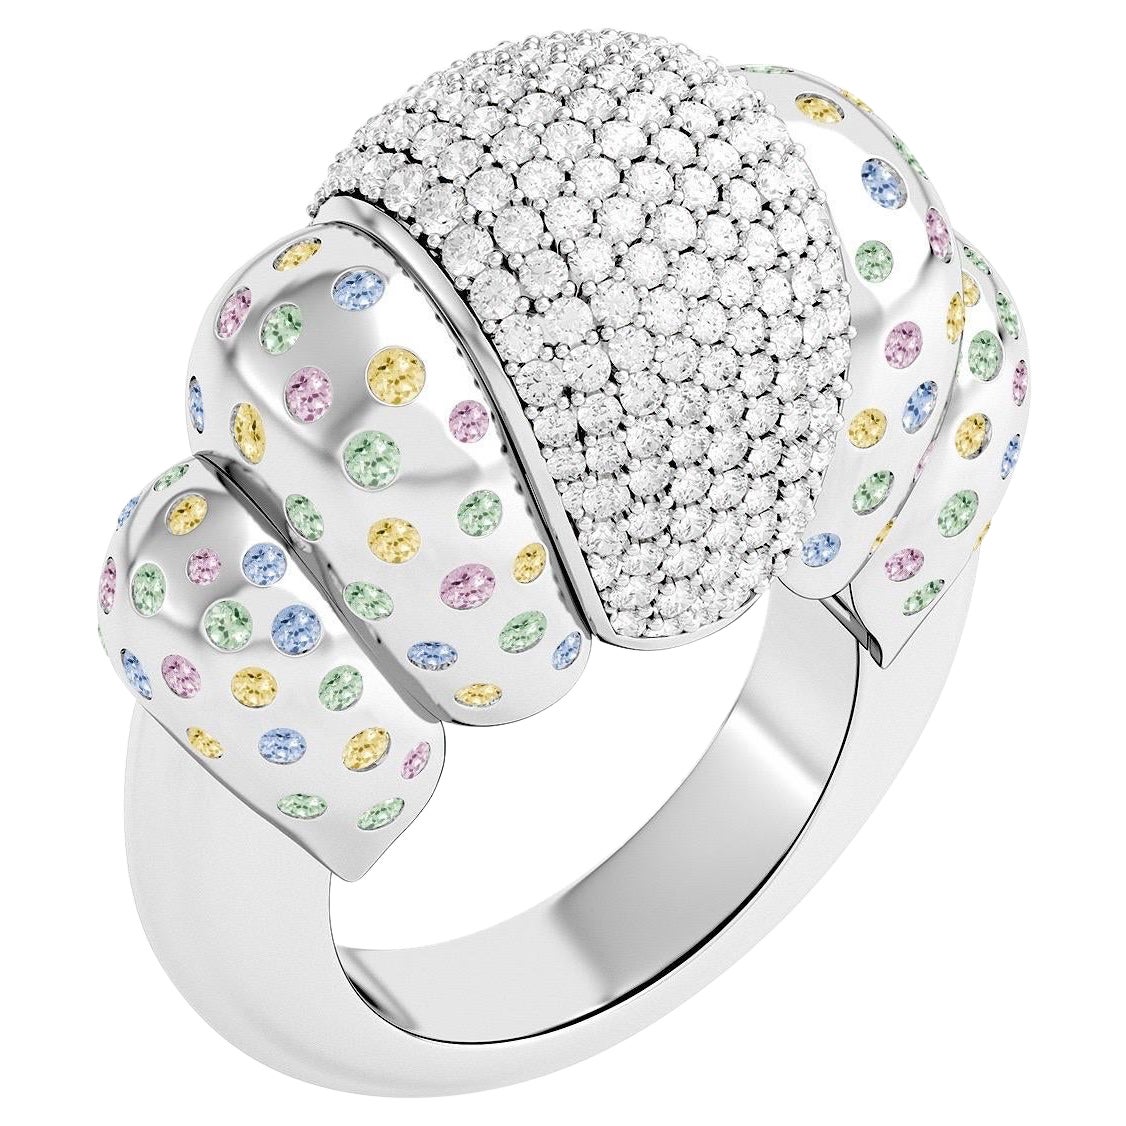 Ruben Manuel Designs “Spring” 18K WG Diamond and Sapphire Shrimp Ring